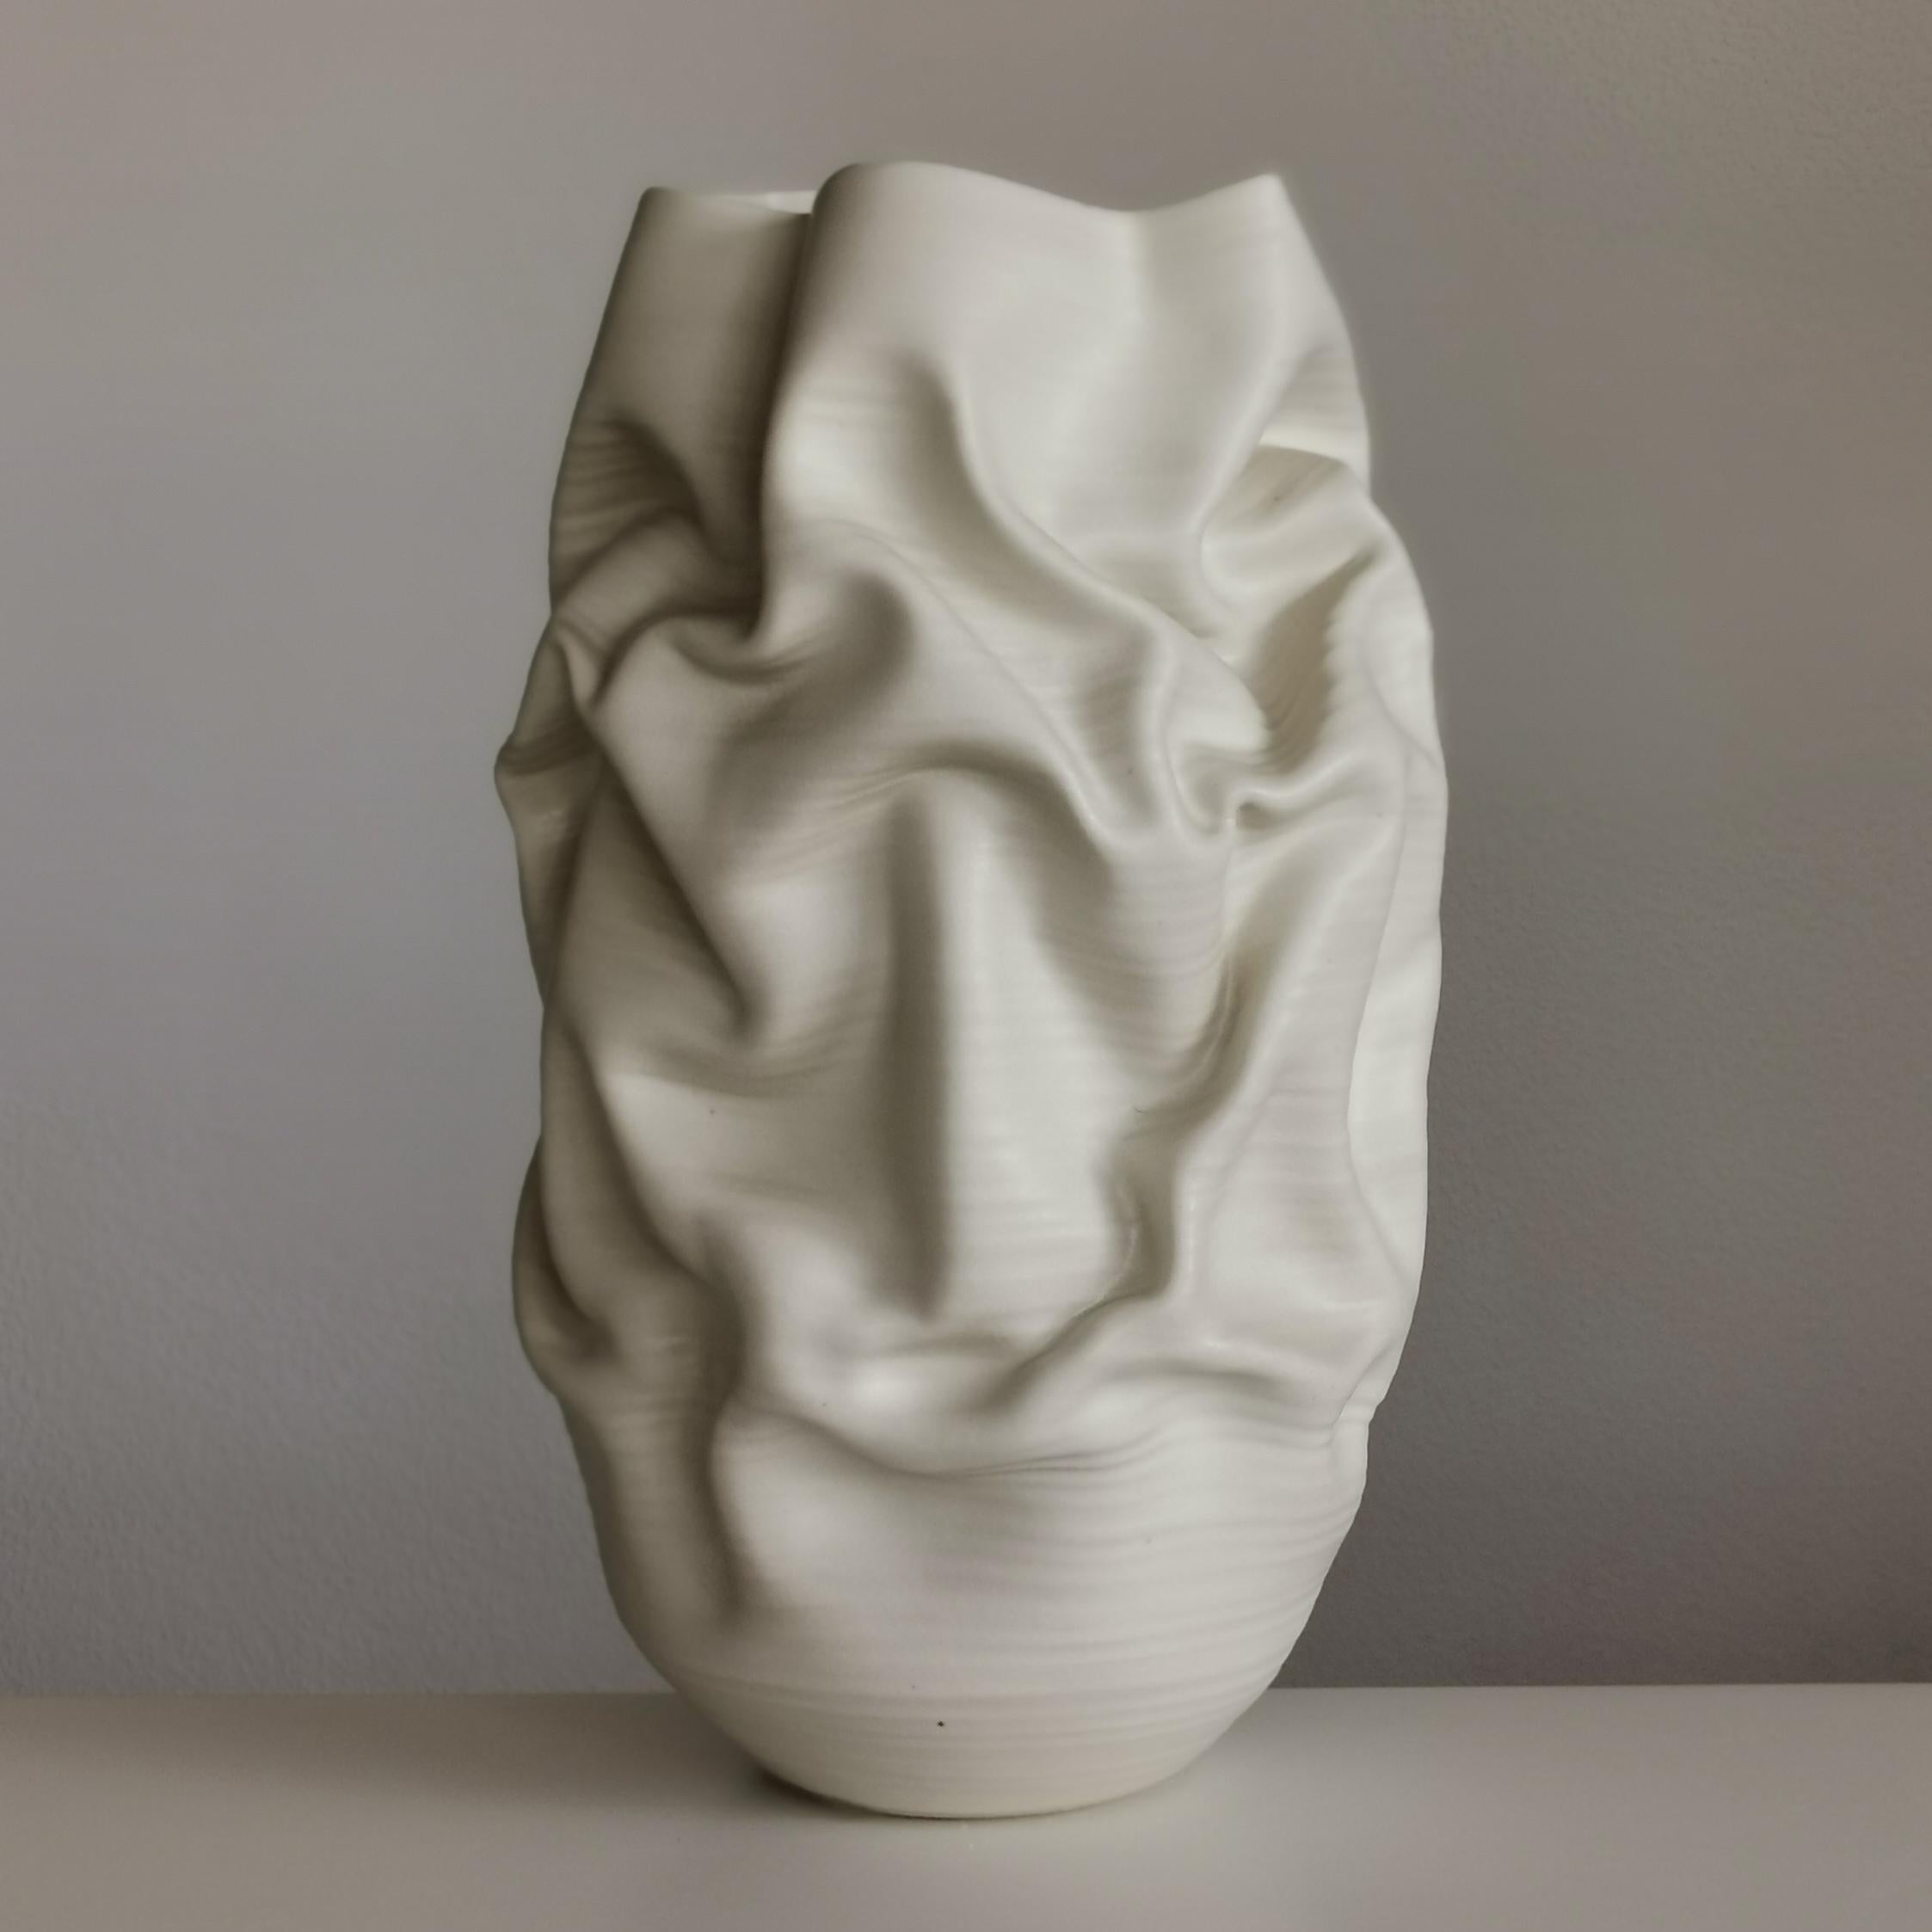 Spanish Tall White Crumpled Form No 31, Ceramic Vessel by Nicholas Arroyave-Portela